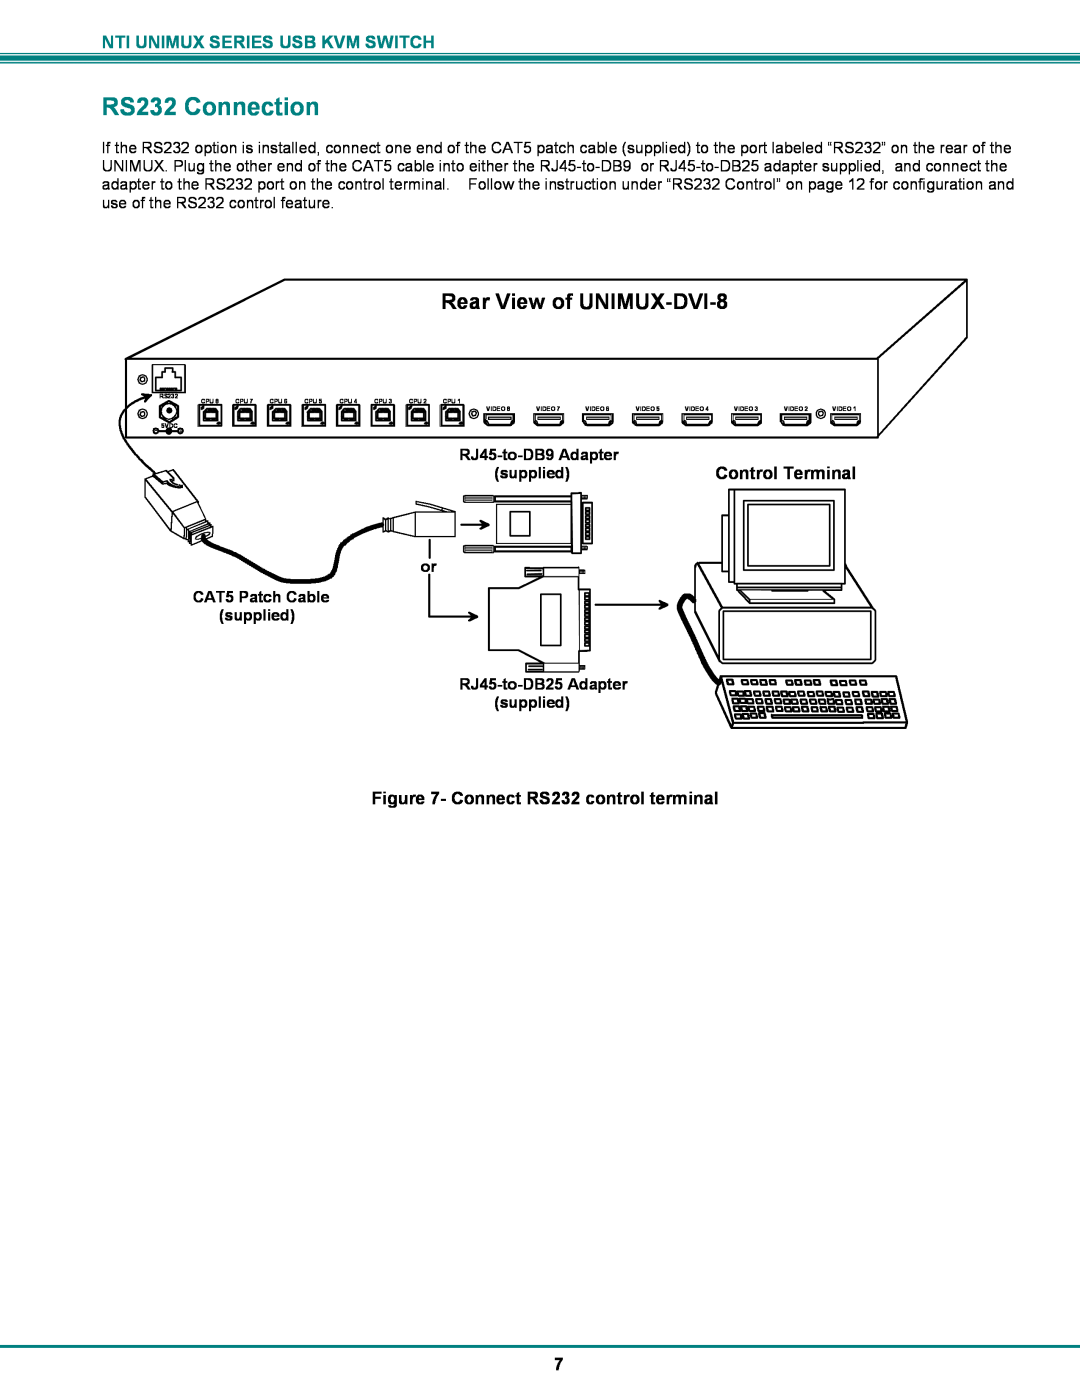 Network Technologies USB DVI KVM, UNIMUX-DVI-x RS232 Connection, Nti Unimux Series Usb Kvm Switch, Control Terminal 